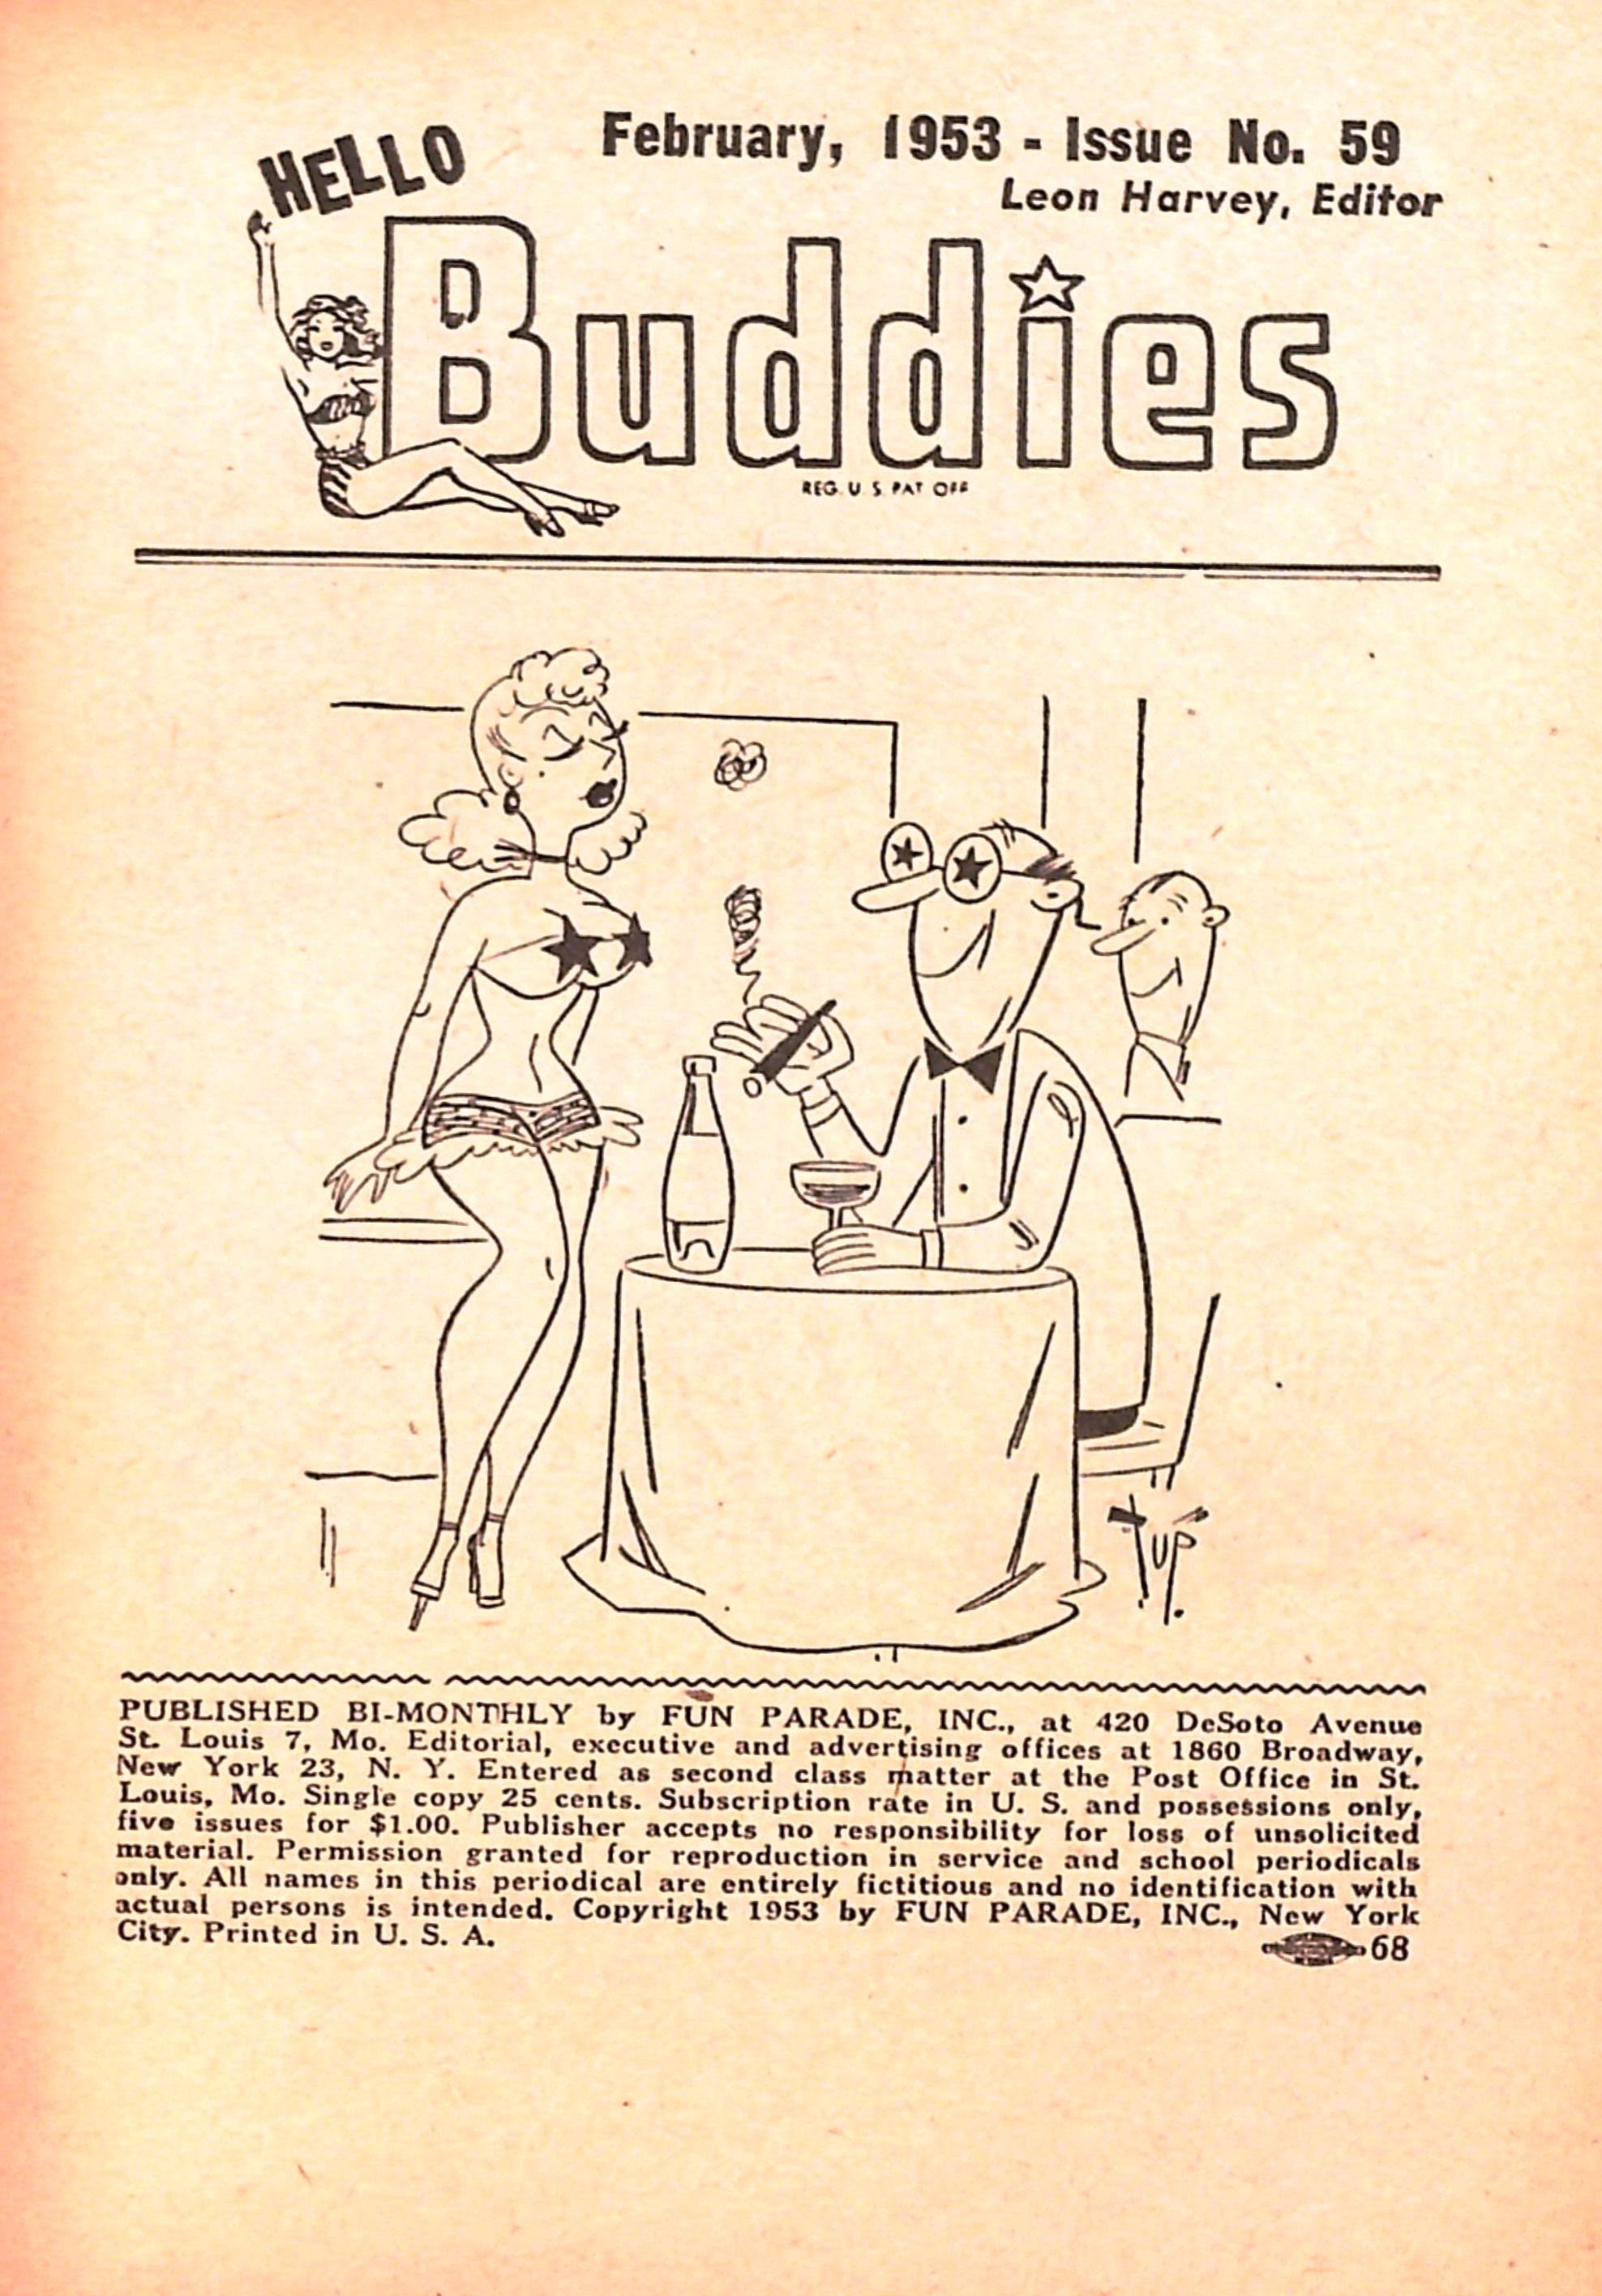 Read online Hello Buddies comic -  Issue #59 - 3